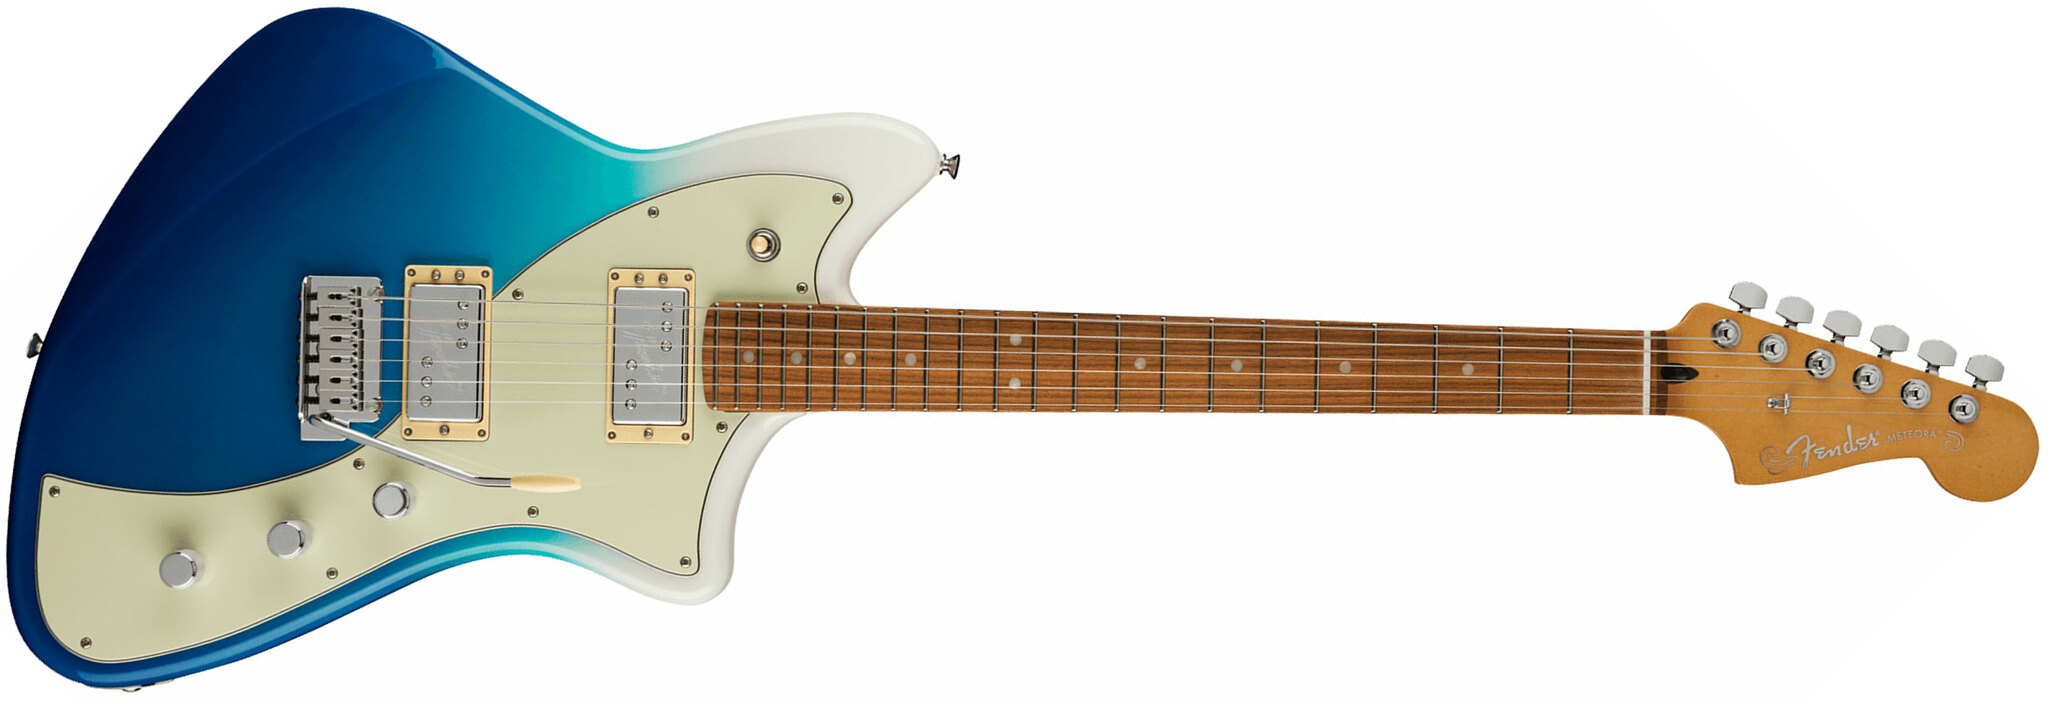 Fender Meteora Player Plus Hh Mex 2h Ht Pf - Belair Blue - Retro rock electric guitar - Main picture